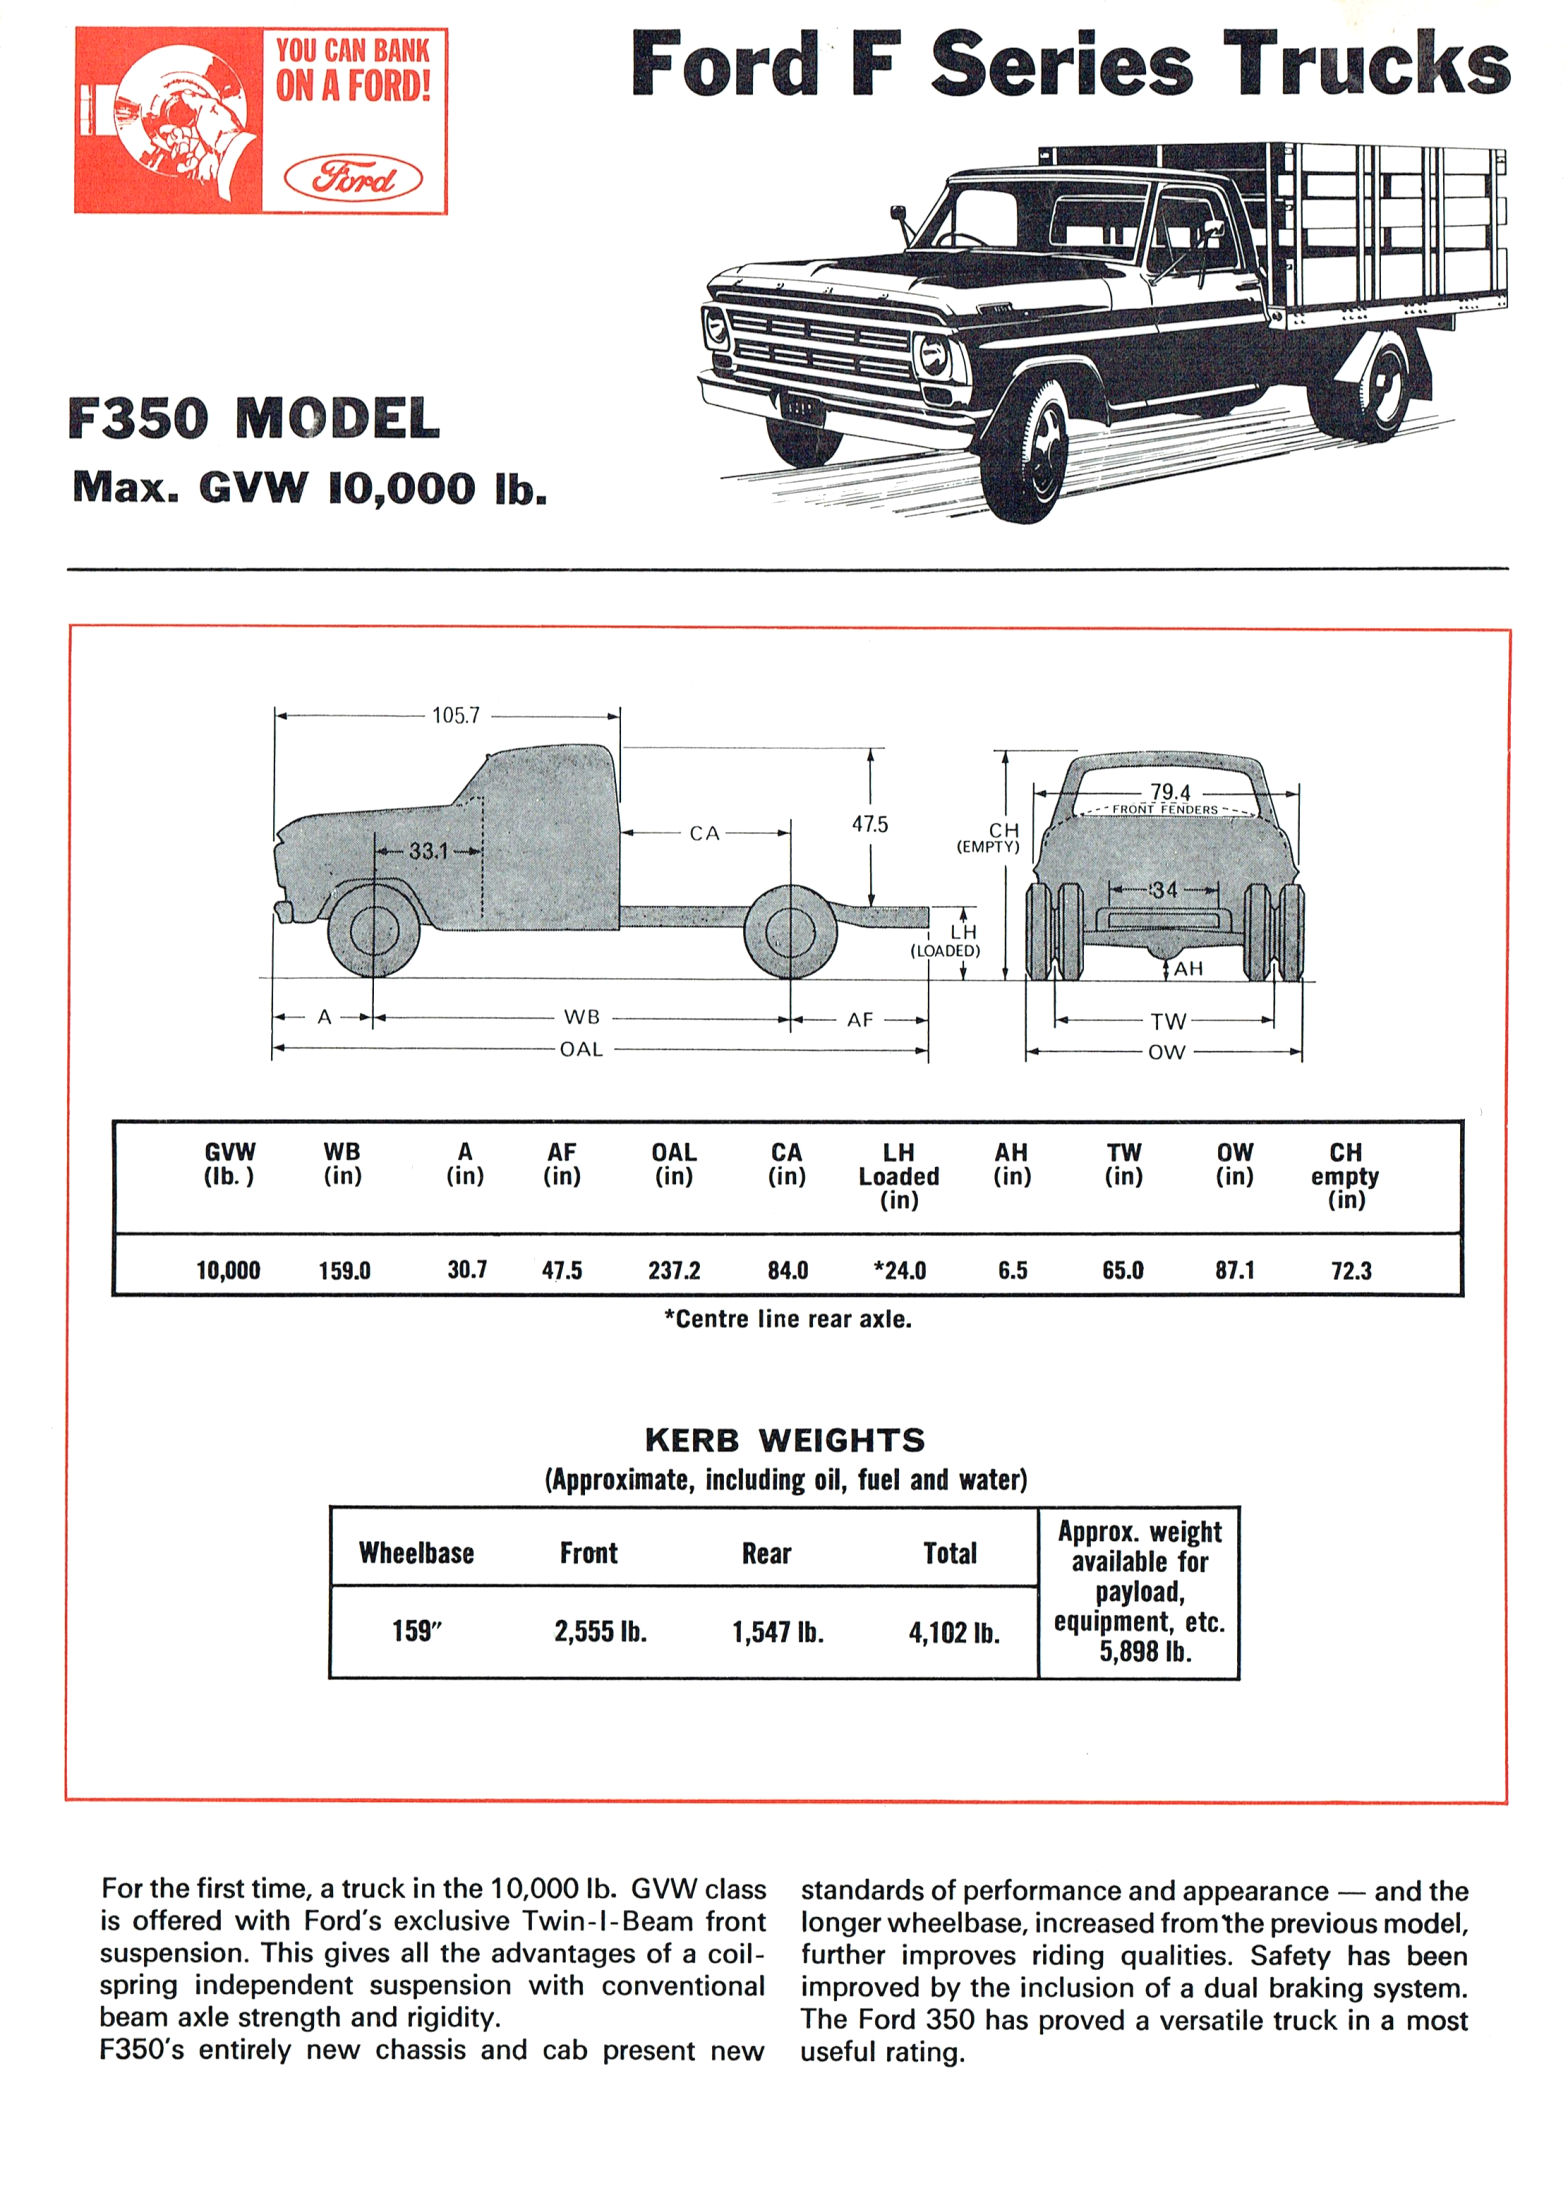 1968 Ford Trucks (Aus)-iF3Ra.jpg-2022-12-7 13.27.17